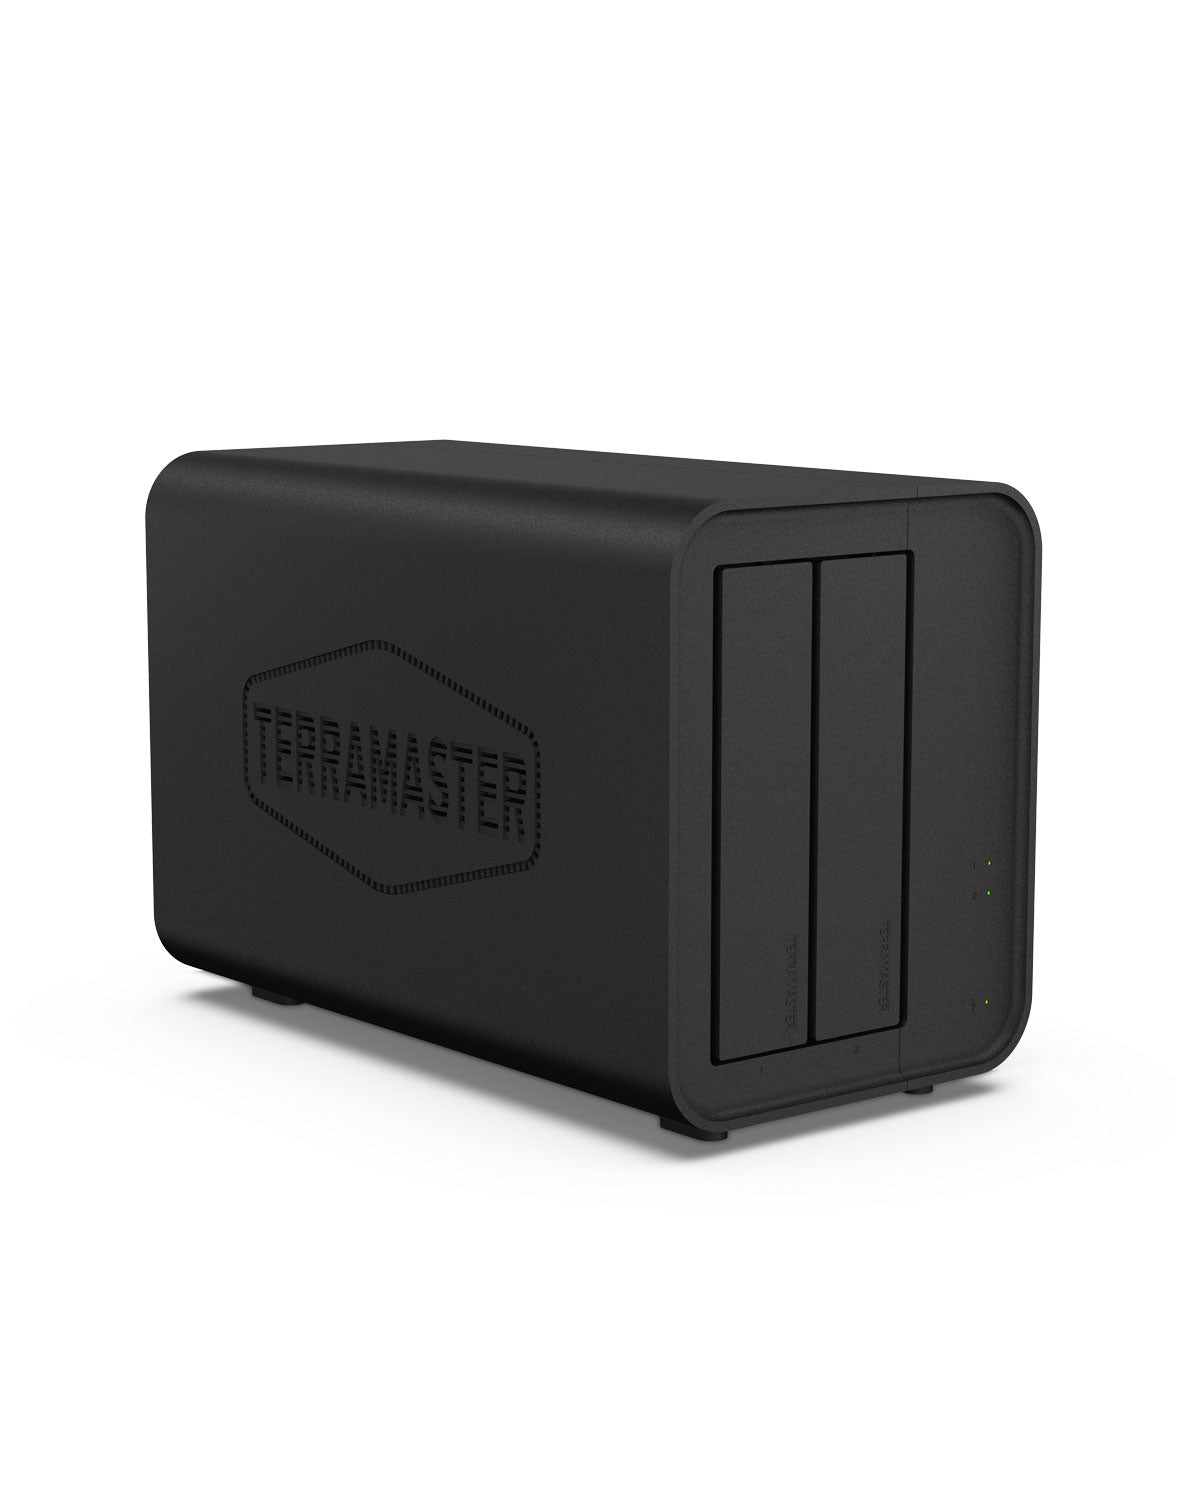 TERRAMASTER D2-320 USB RAID Enclosure – USB 3.2 Gen 2 10Gbps Type C 2Bay RAID Storage Supports RAID 0, 1, Single, JBOD (Diskless)